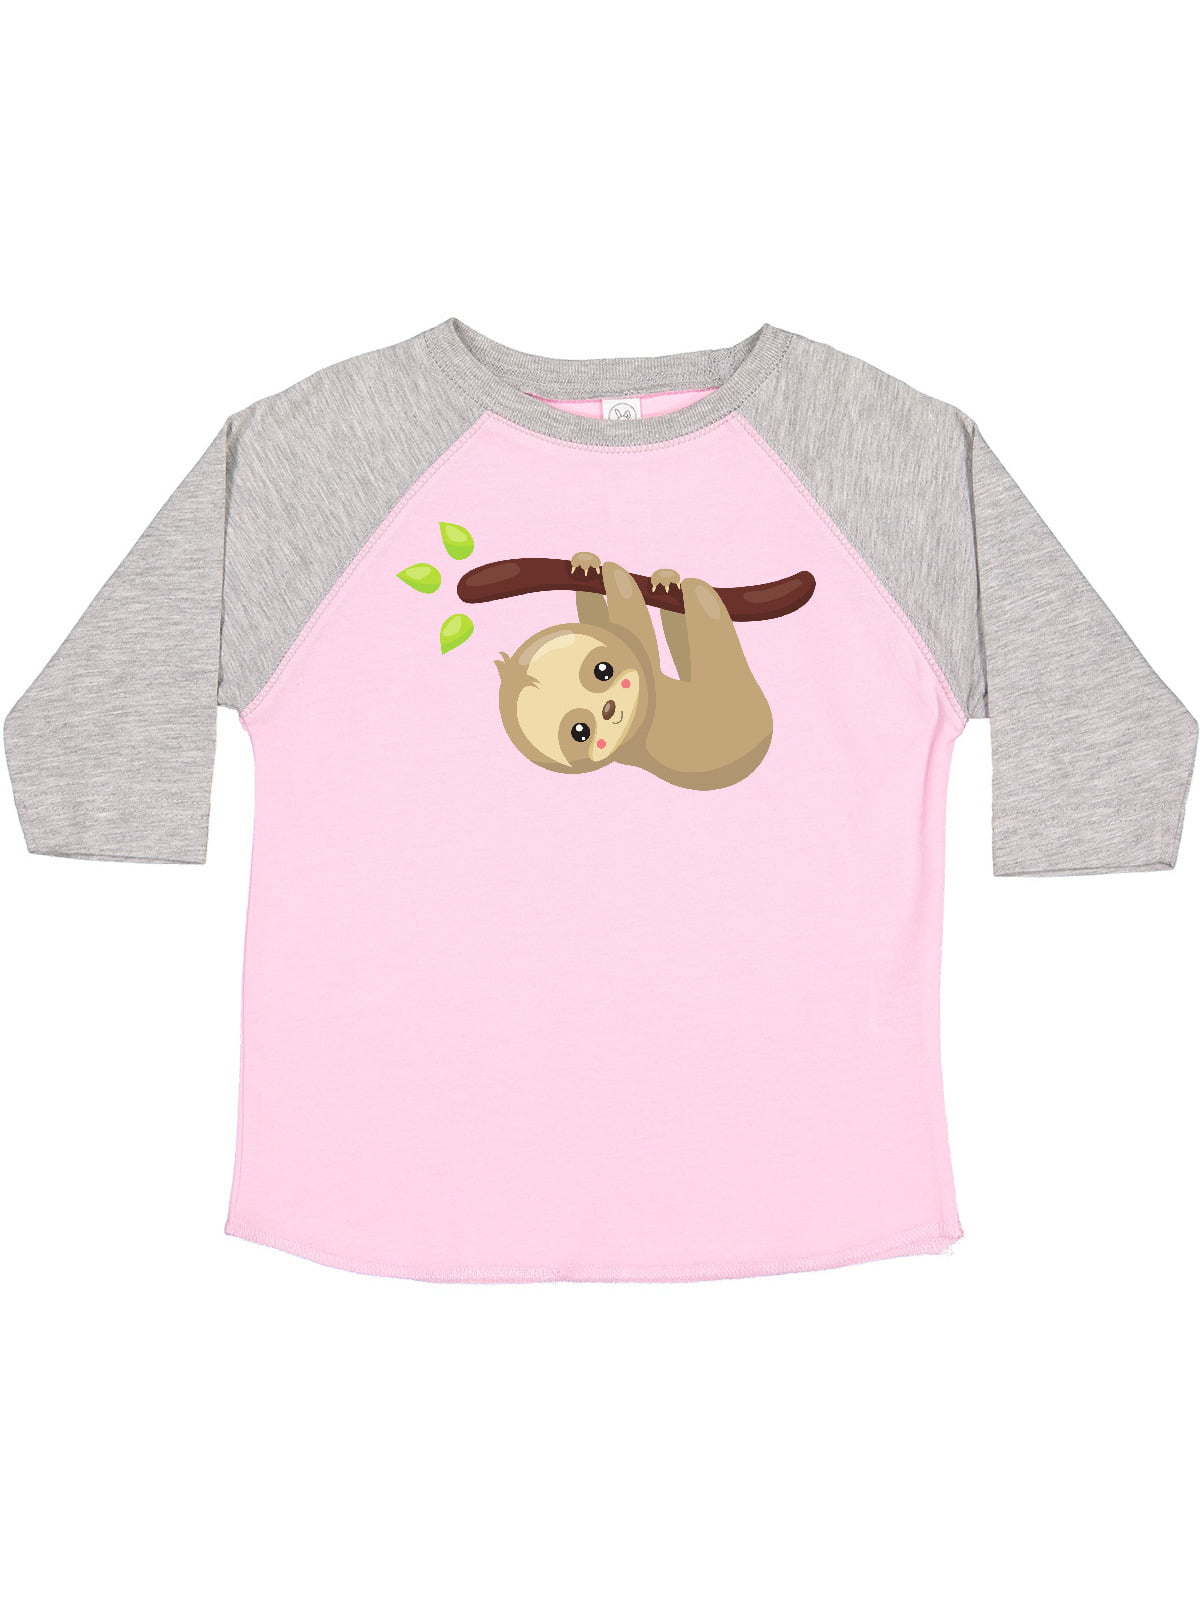 Sloth Vintage Retro Rainbow Toddler Baby Girls Short Sleeve Ruffle T-Shirt 